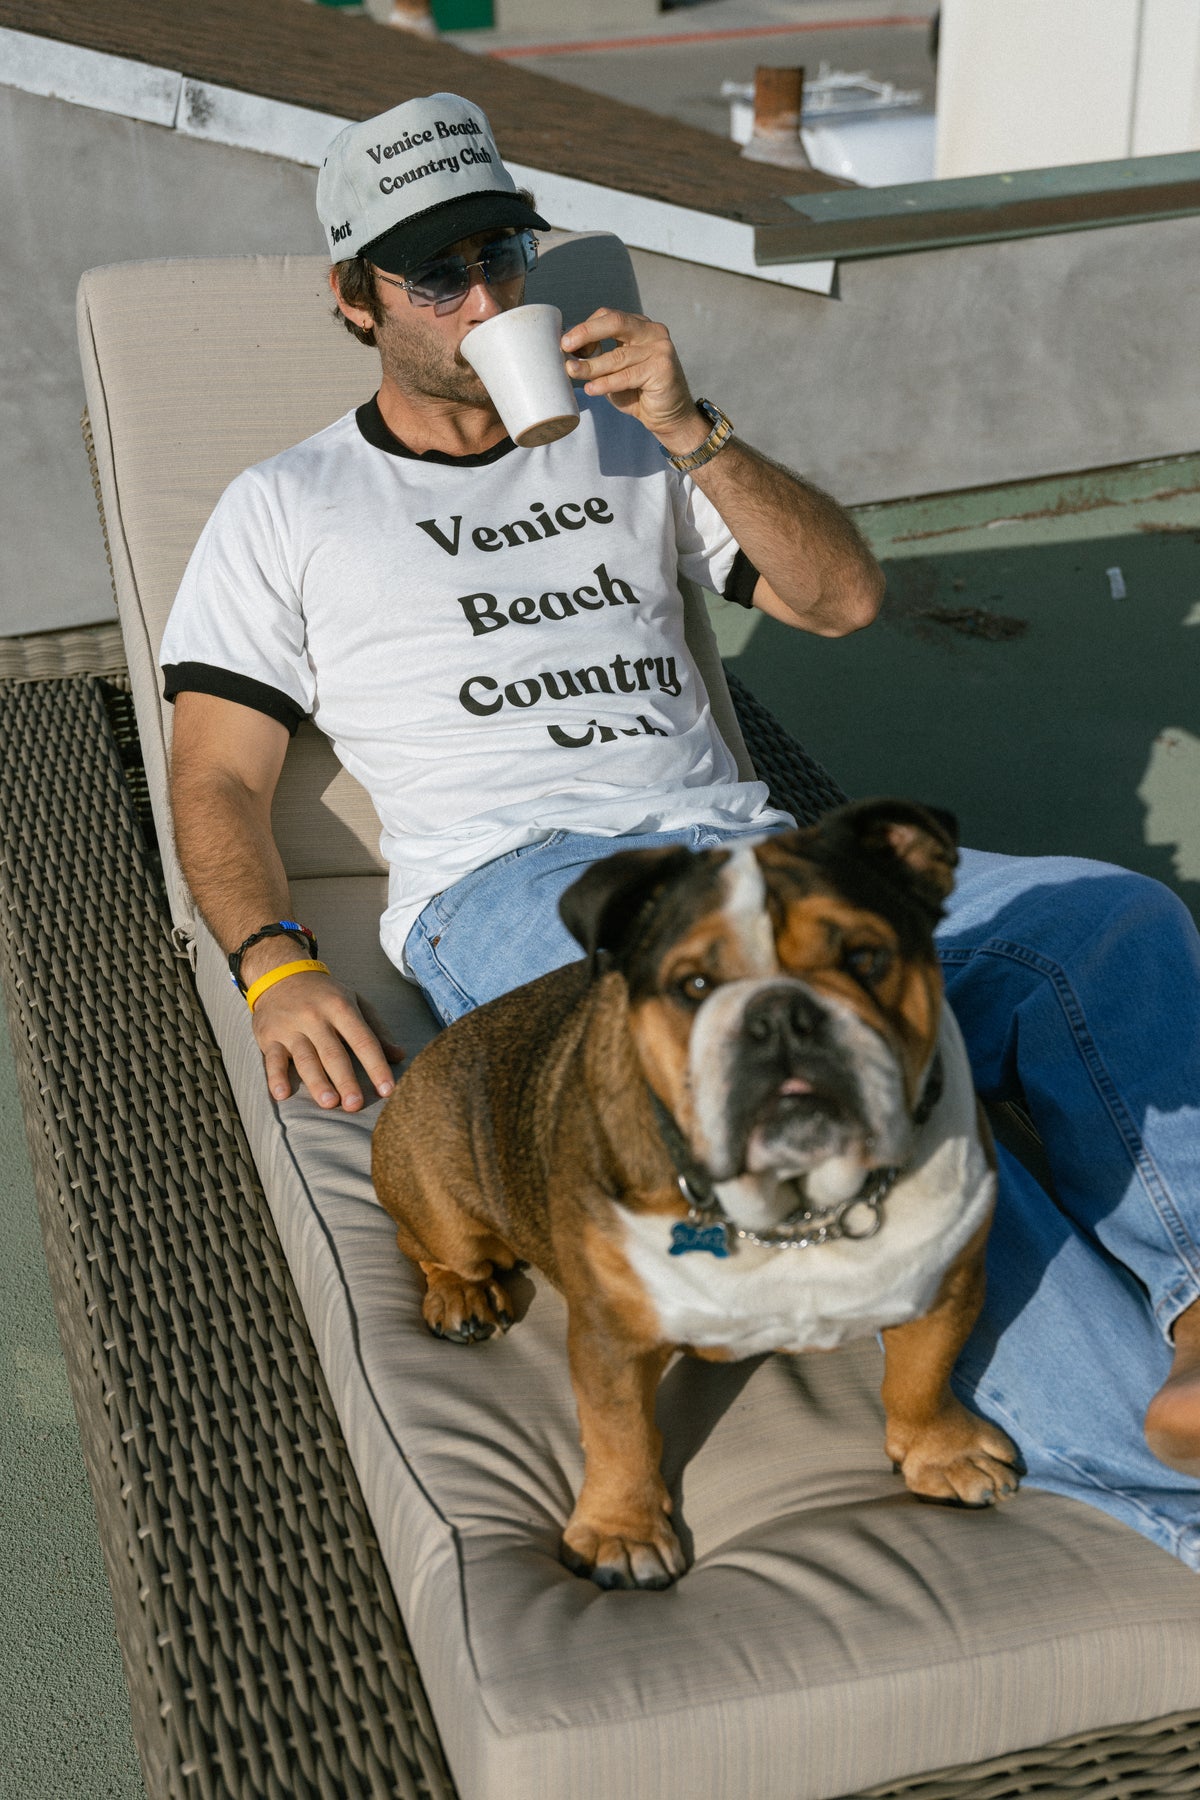 Unisex Venice Beach Country Club Short Sleeve Shirt